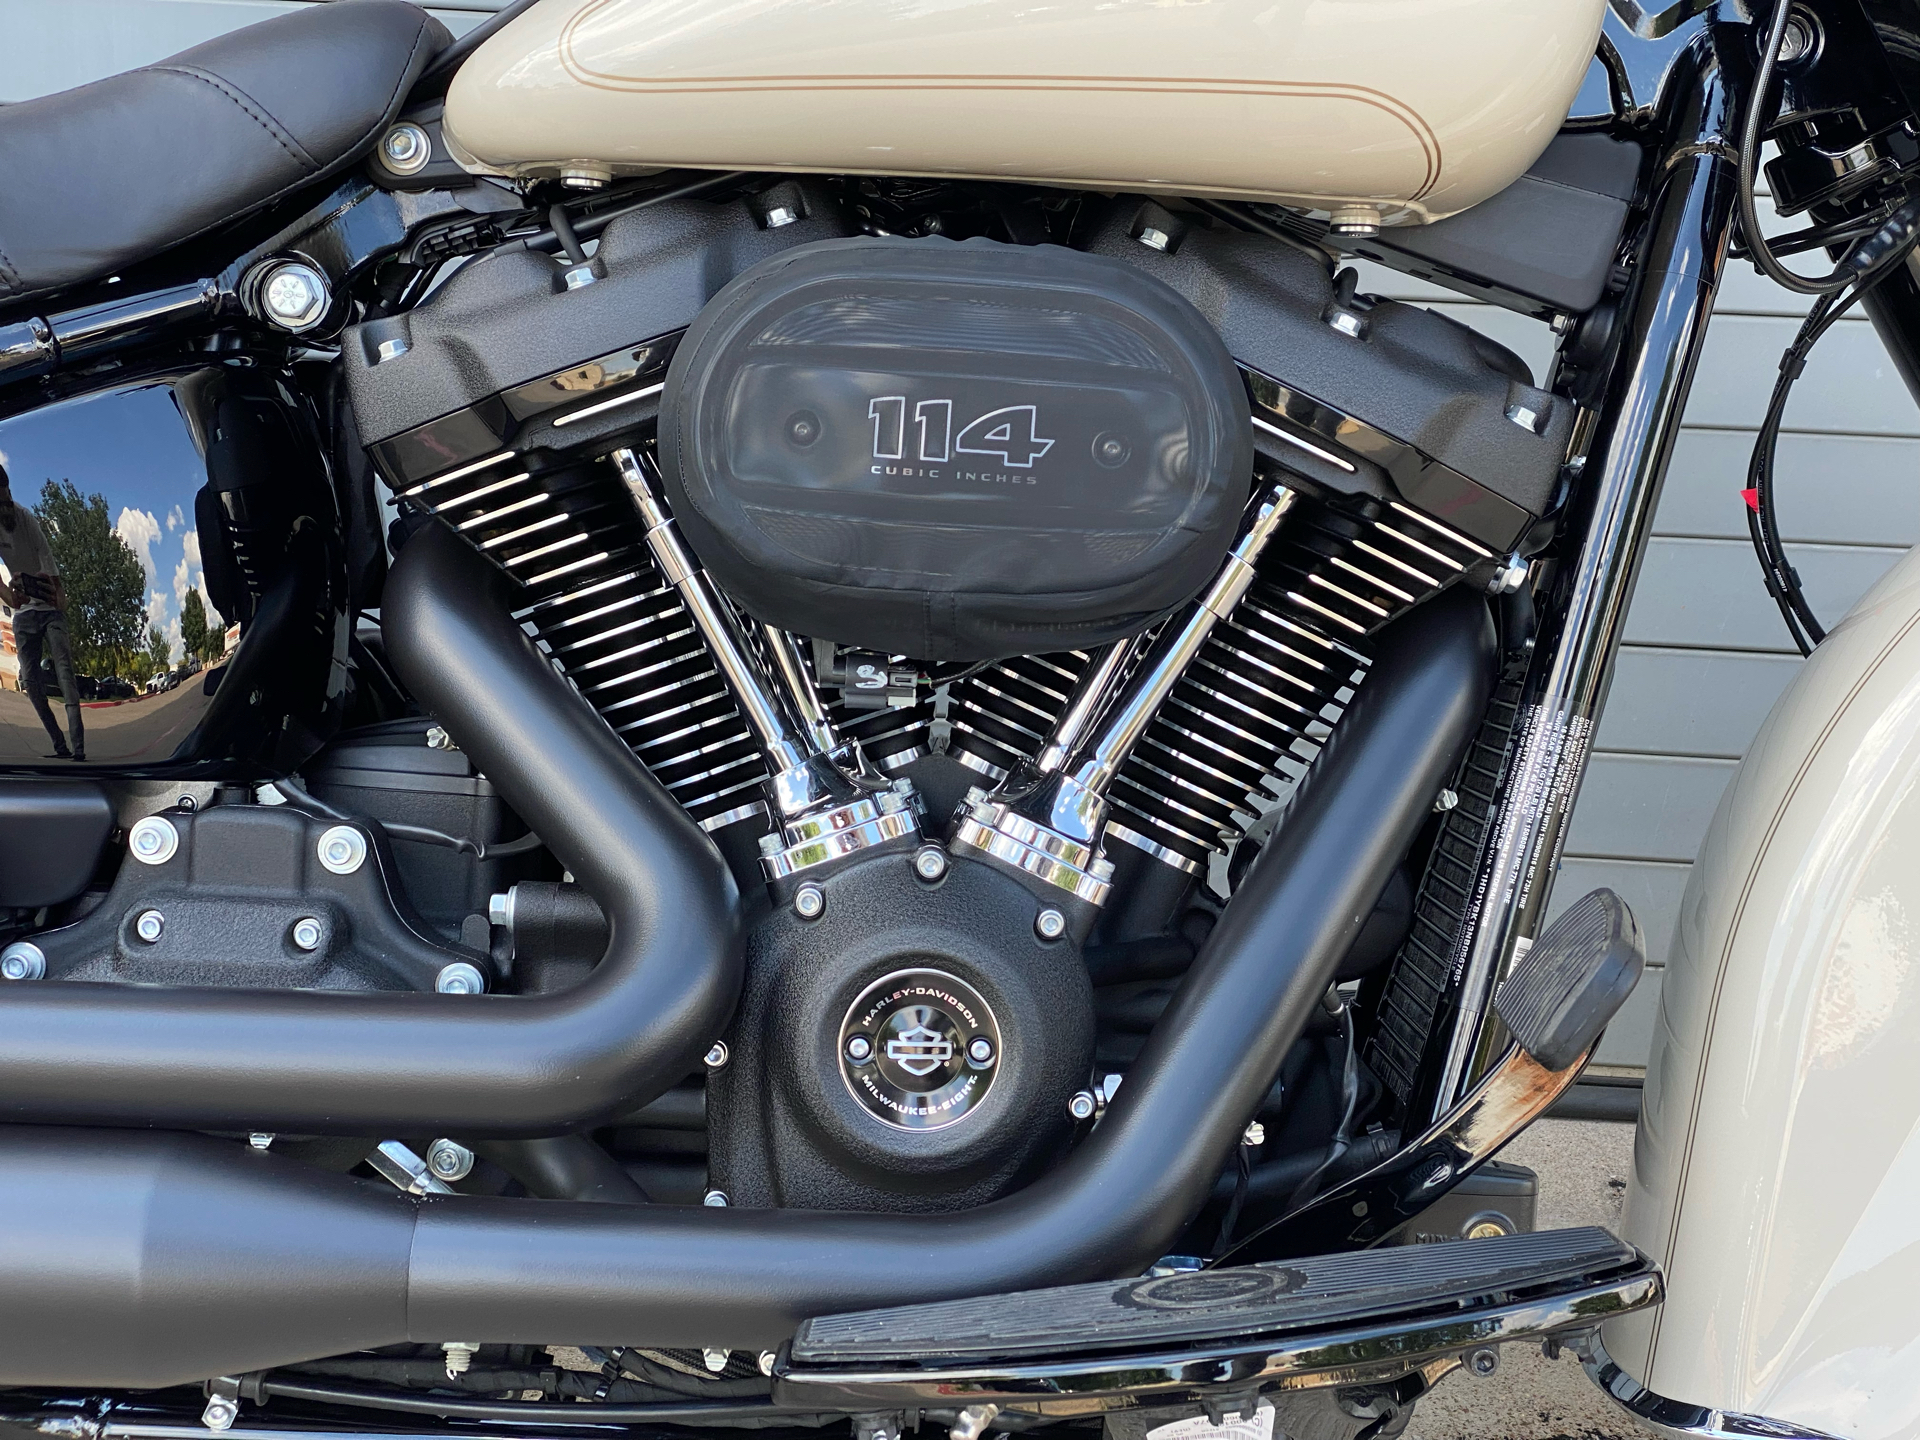 2022 Harley-Davidson Heritage Classic 114 in Grand Prairie, Texas - Photo 5